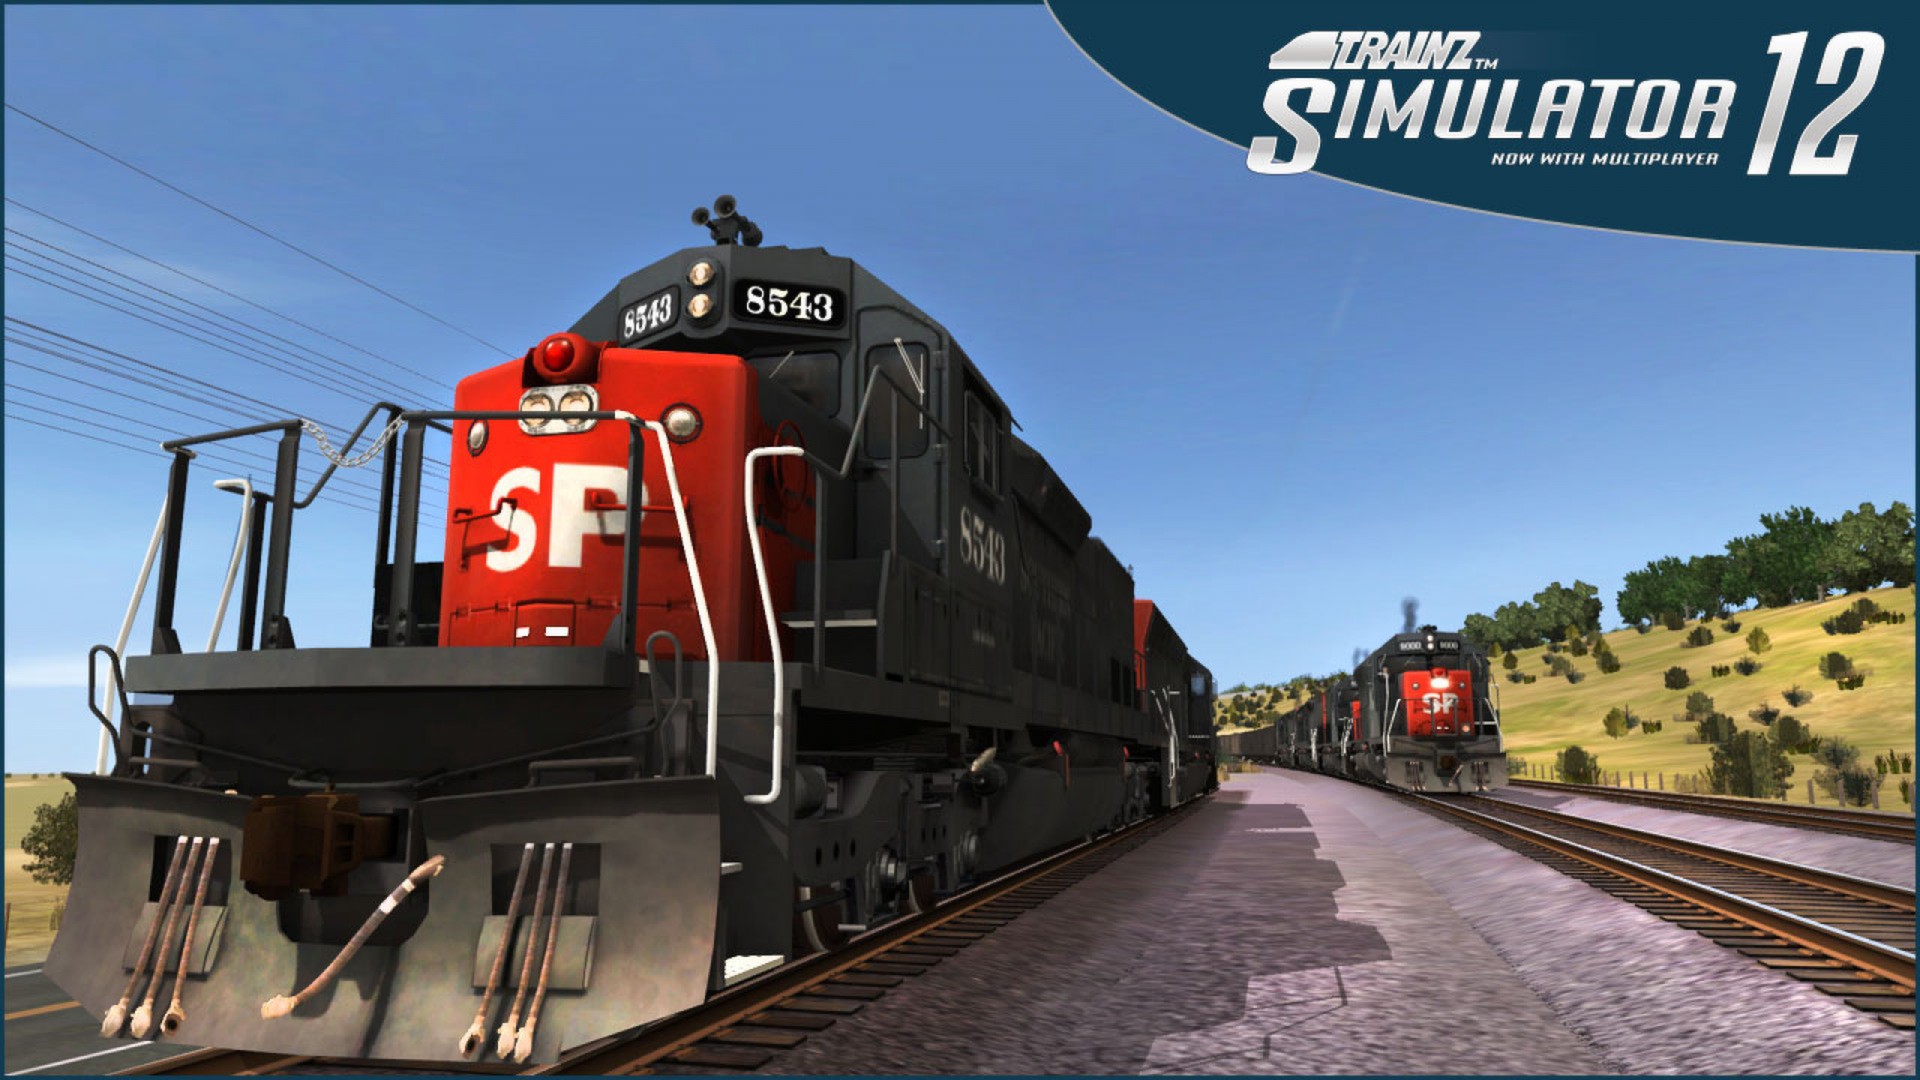 trainz simulator free download pc